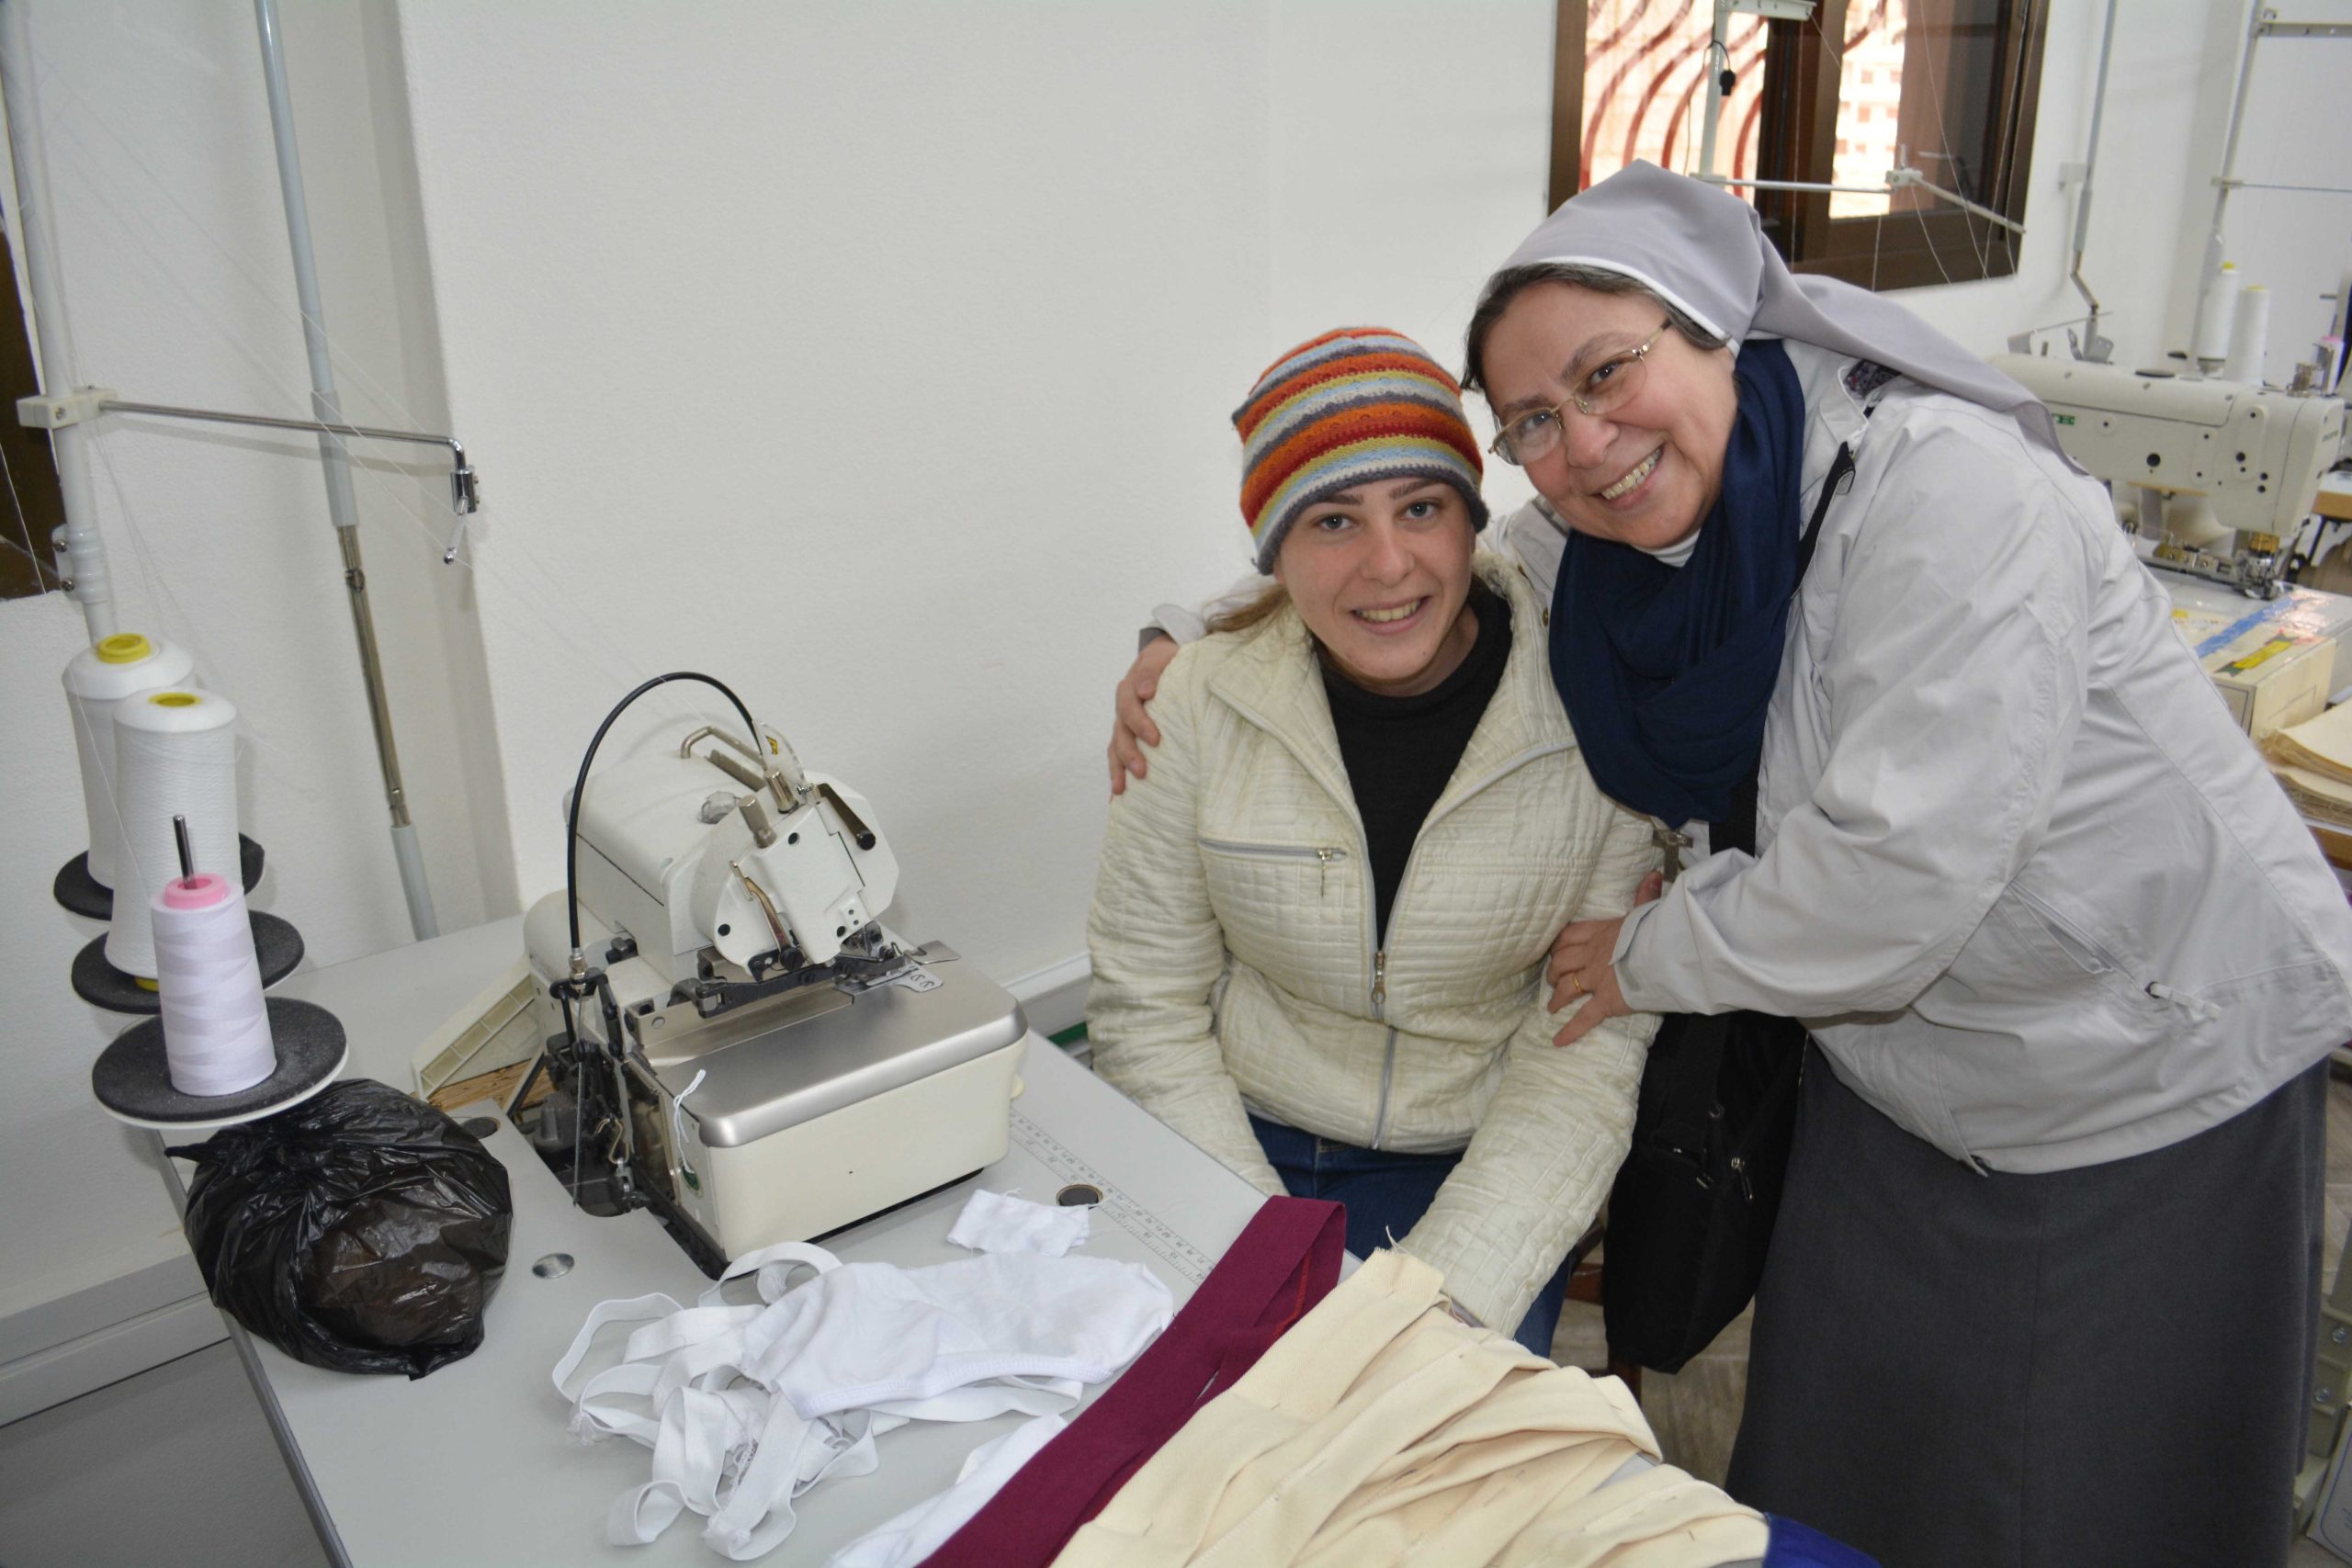 Sister Annie Demerjian with tailor Takla al Safadi in a workshop in Maaloula.